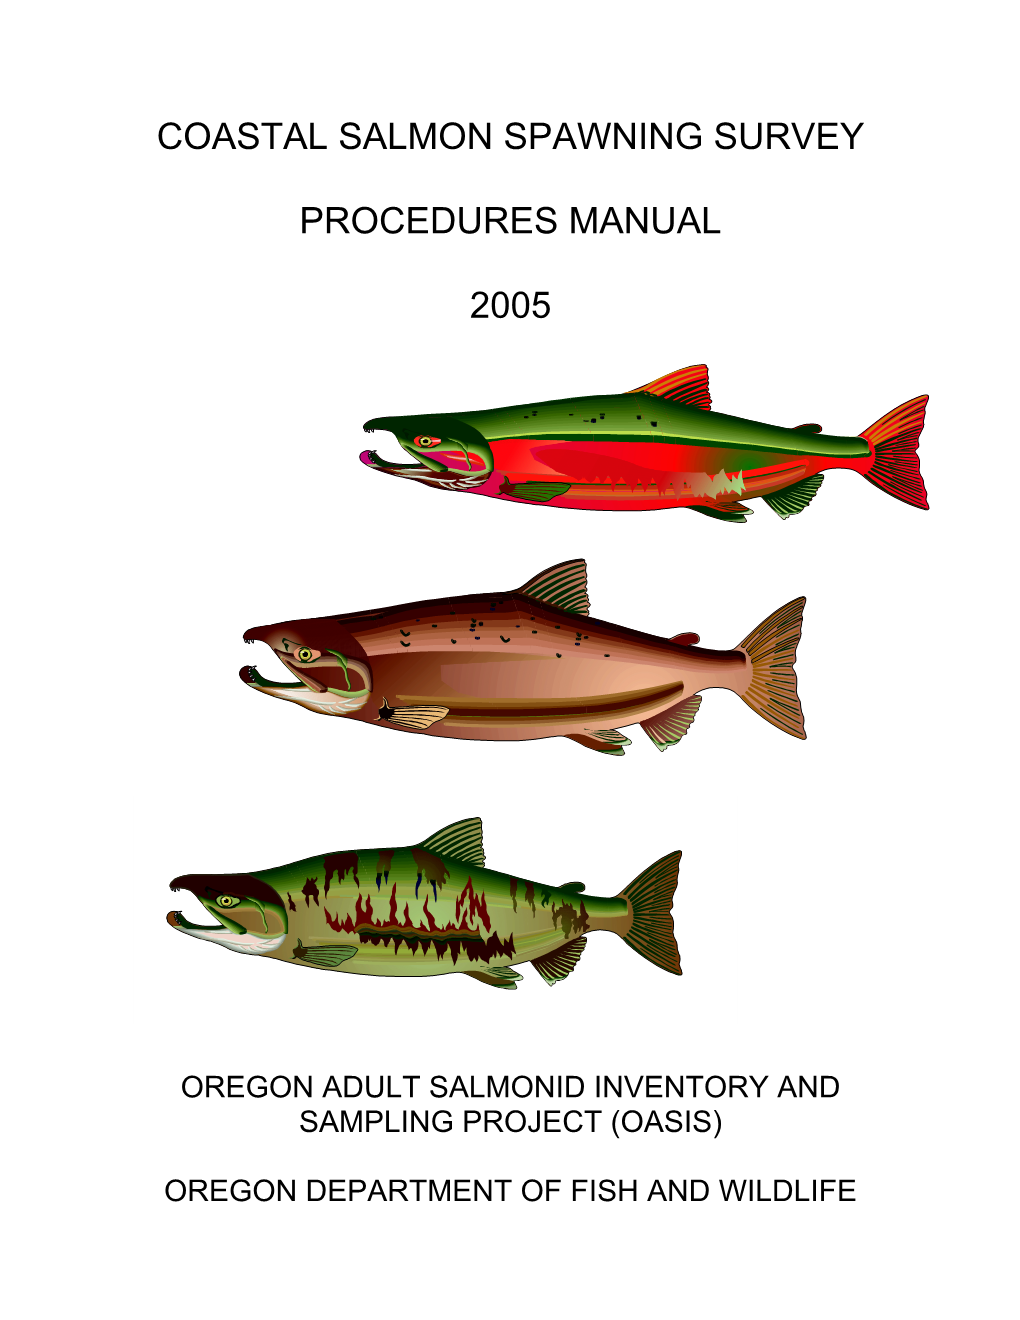 Coastal Salmon Spawning Survey Procedures Manual 2005